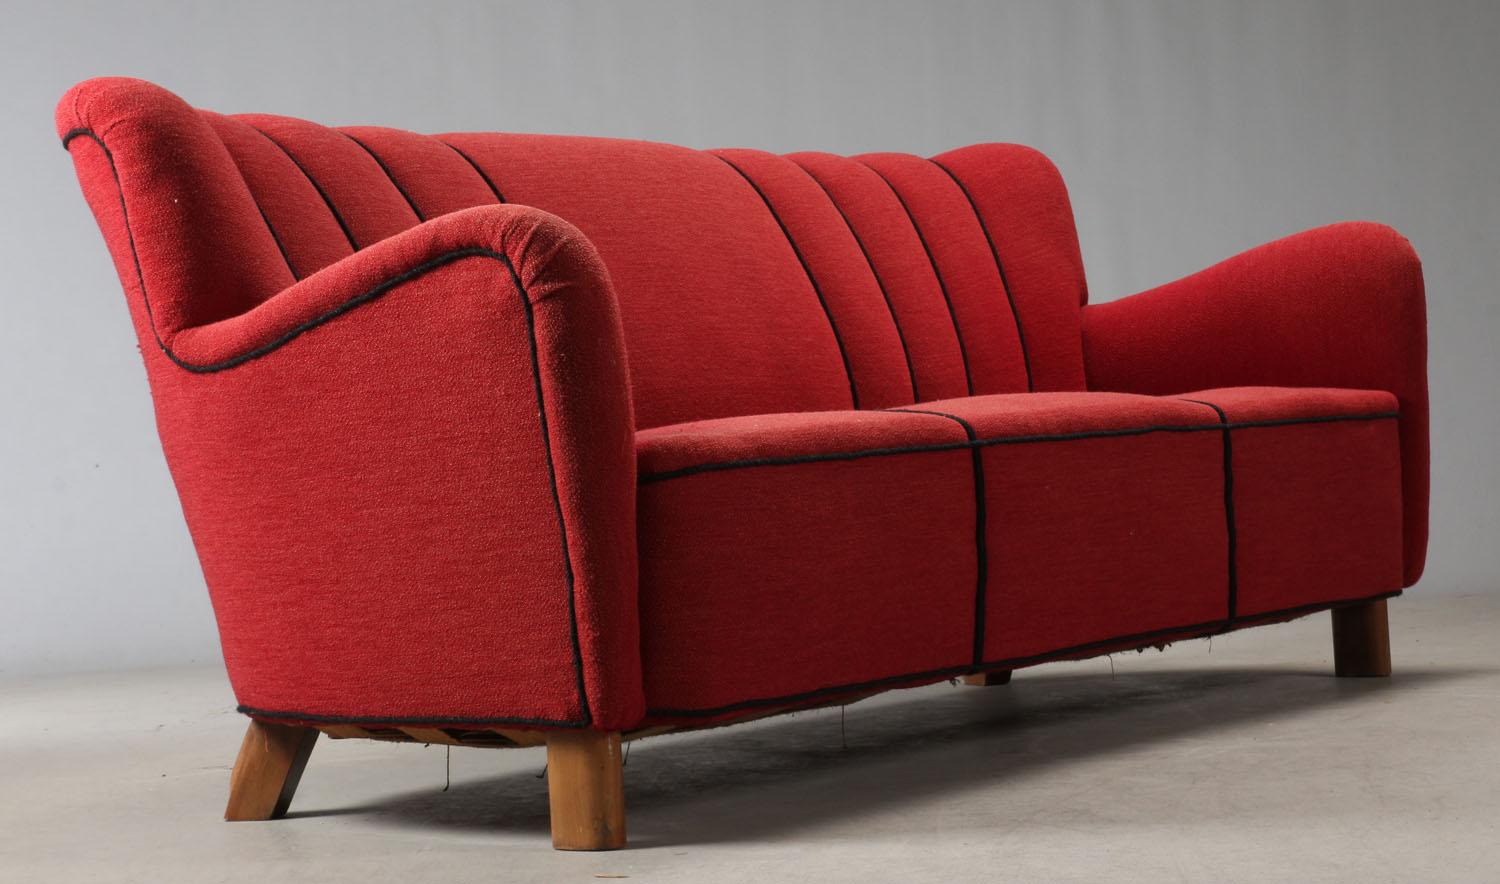 Mid-Century Modern Fritz Hansen Three-Seat Sofa Model 1669a Red 3-Seat Couch 1940s Midcentury